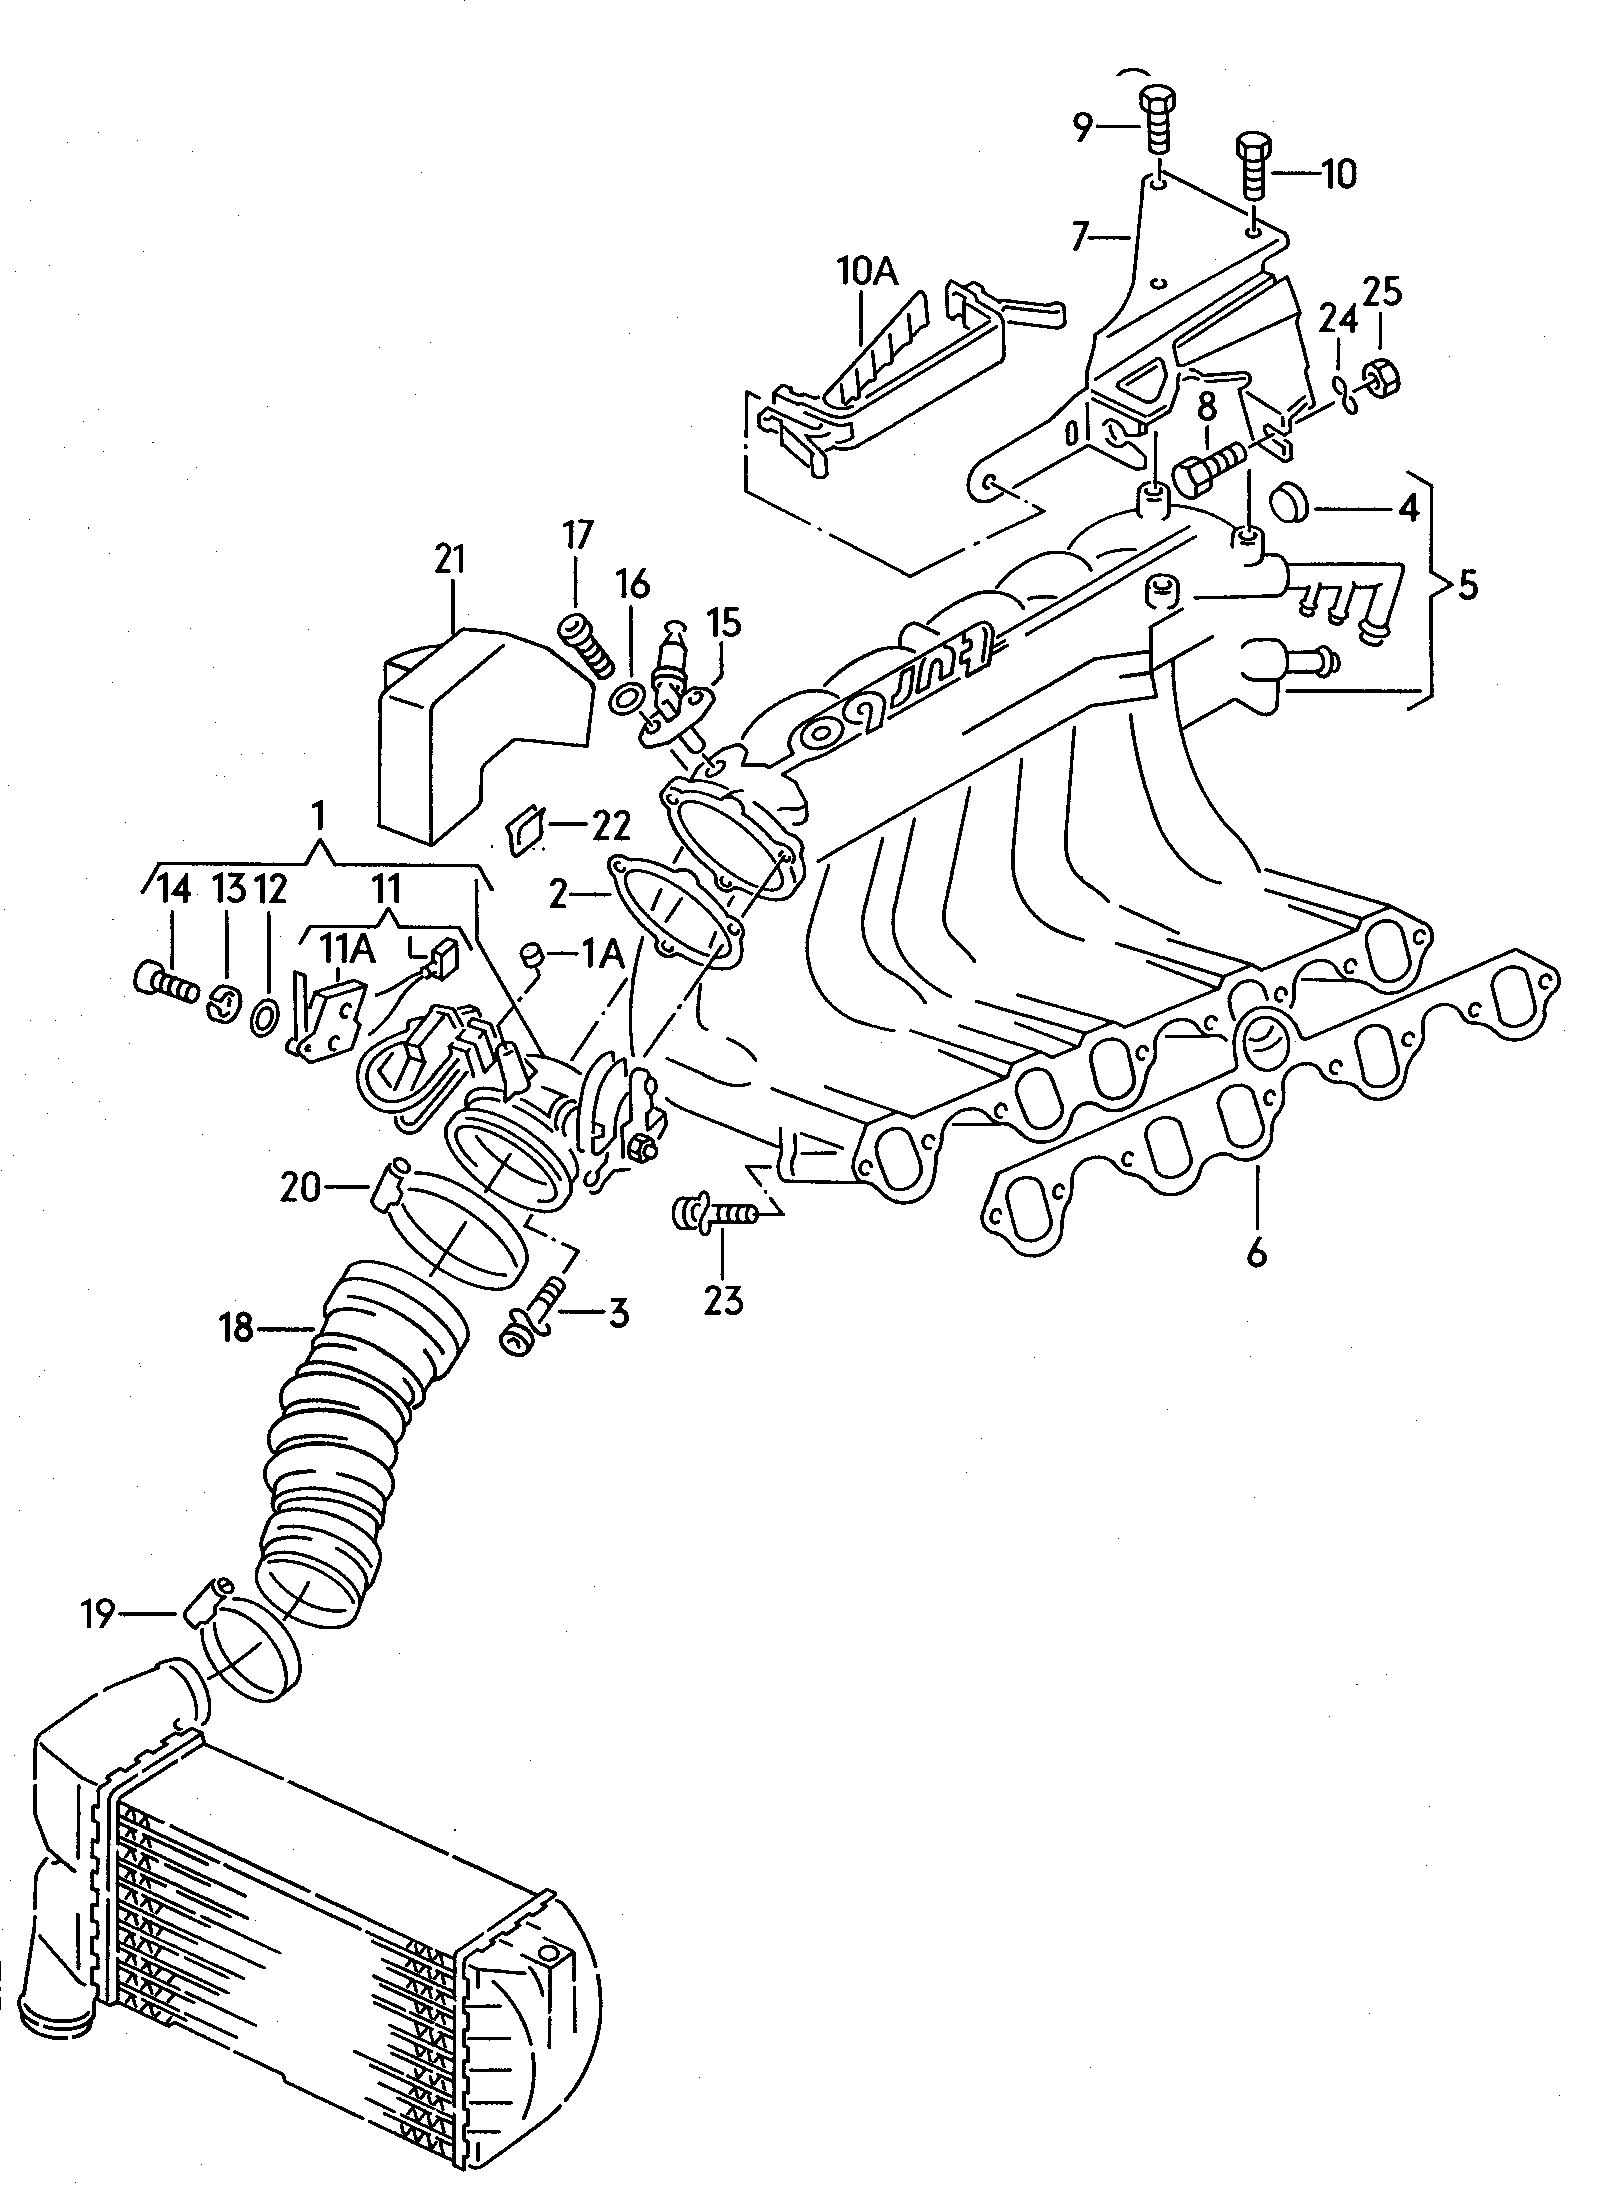 throttle valve adapter; intake connection; tempera... - Audi 200/Avant quattro(A20Q)  